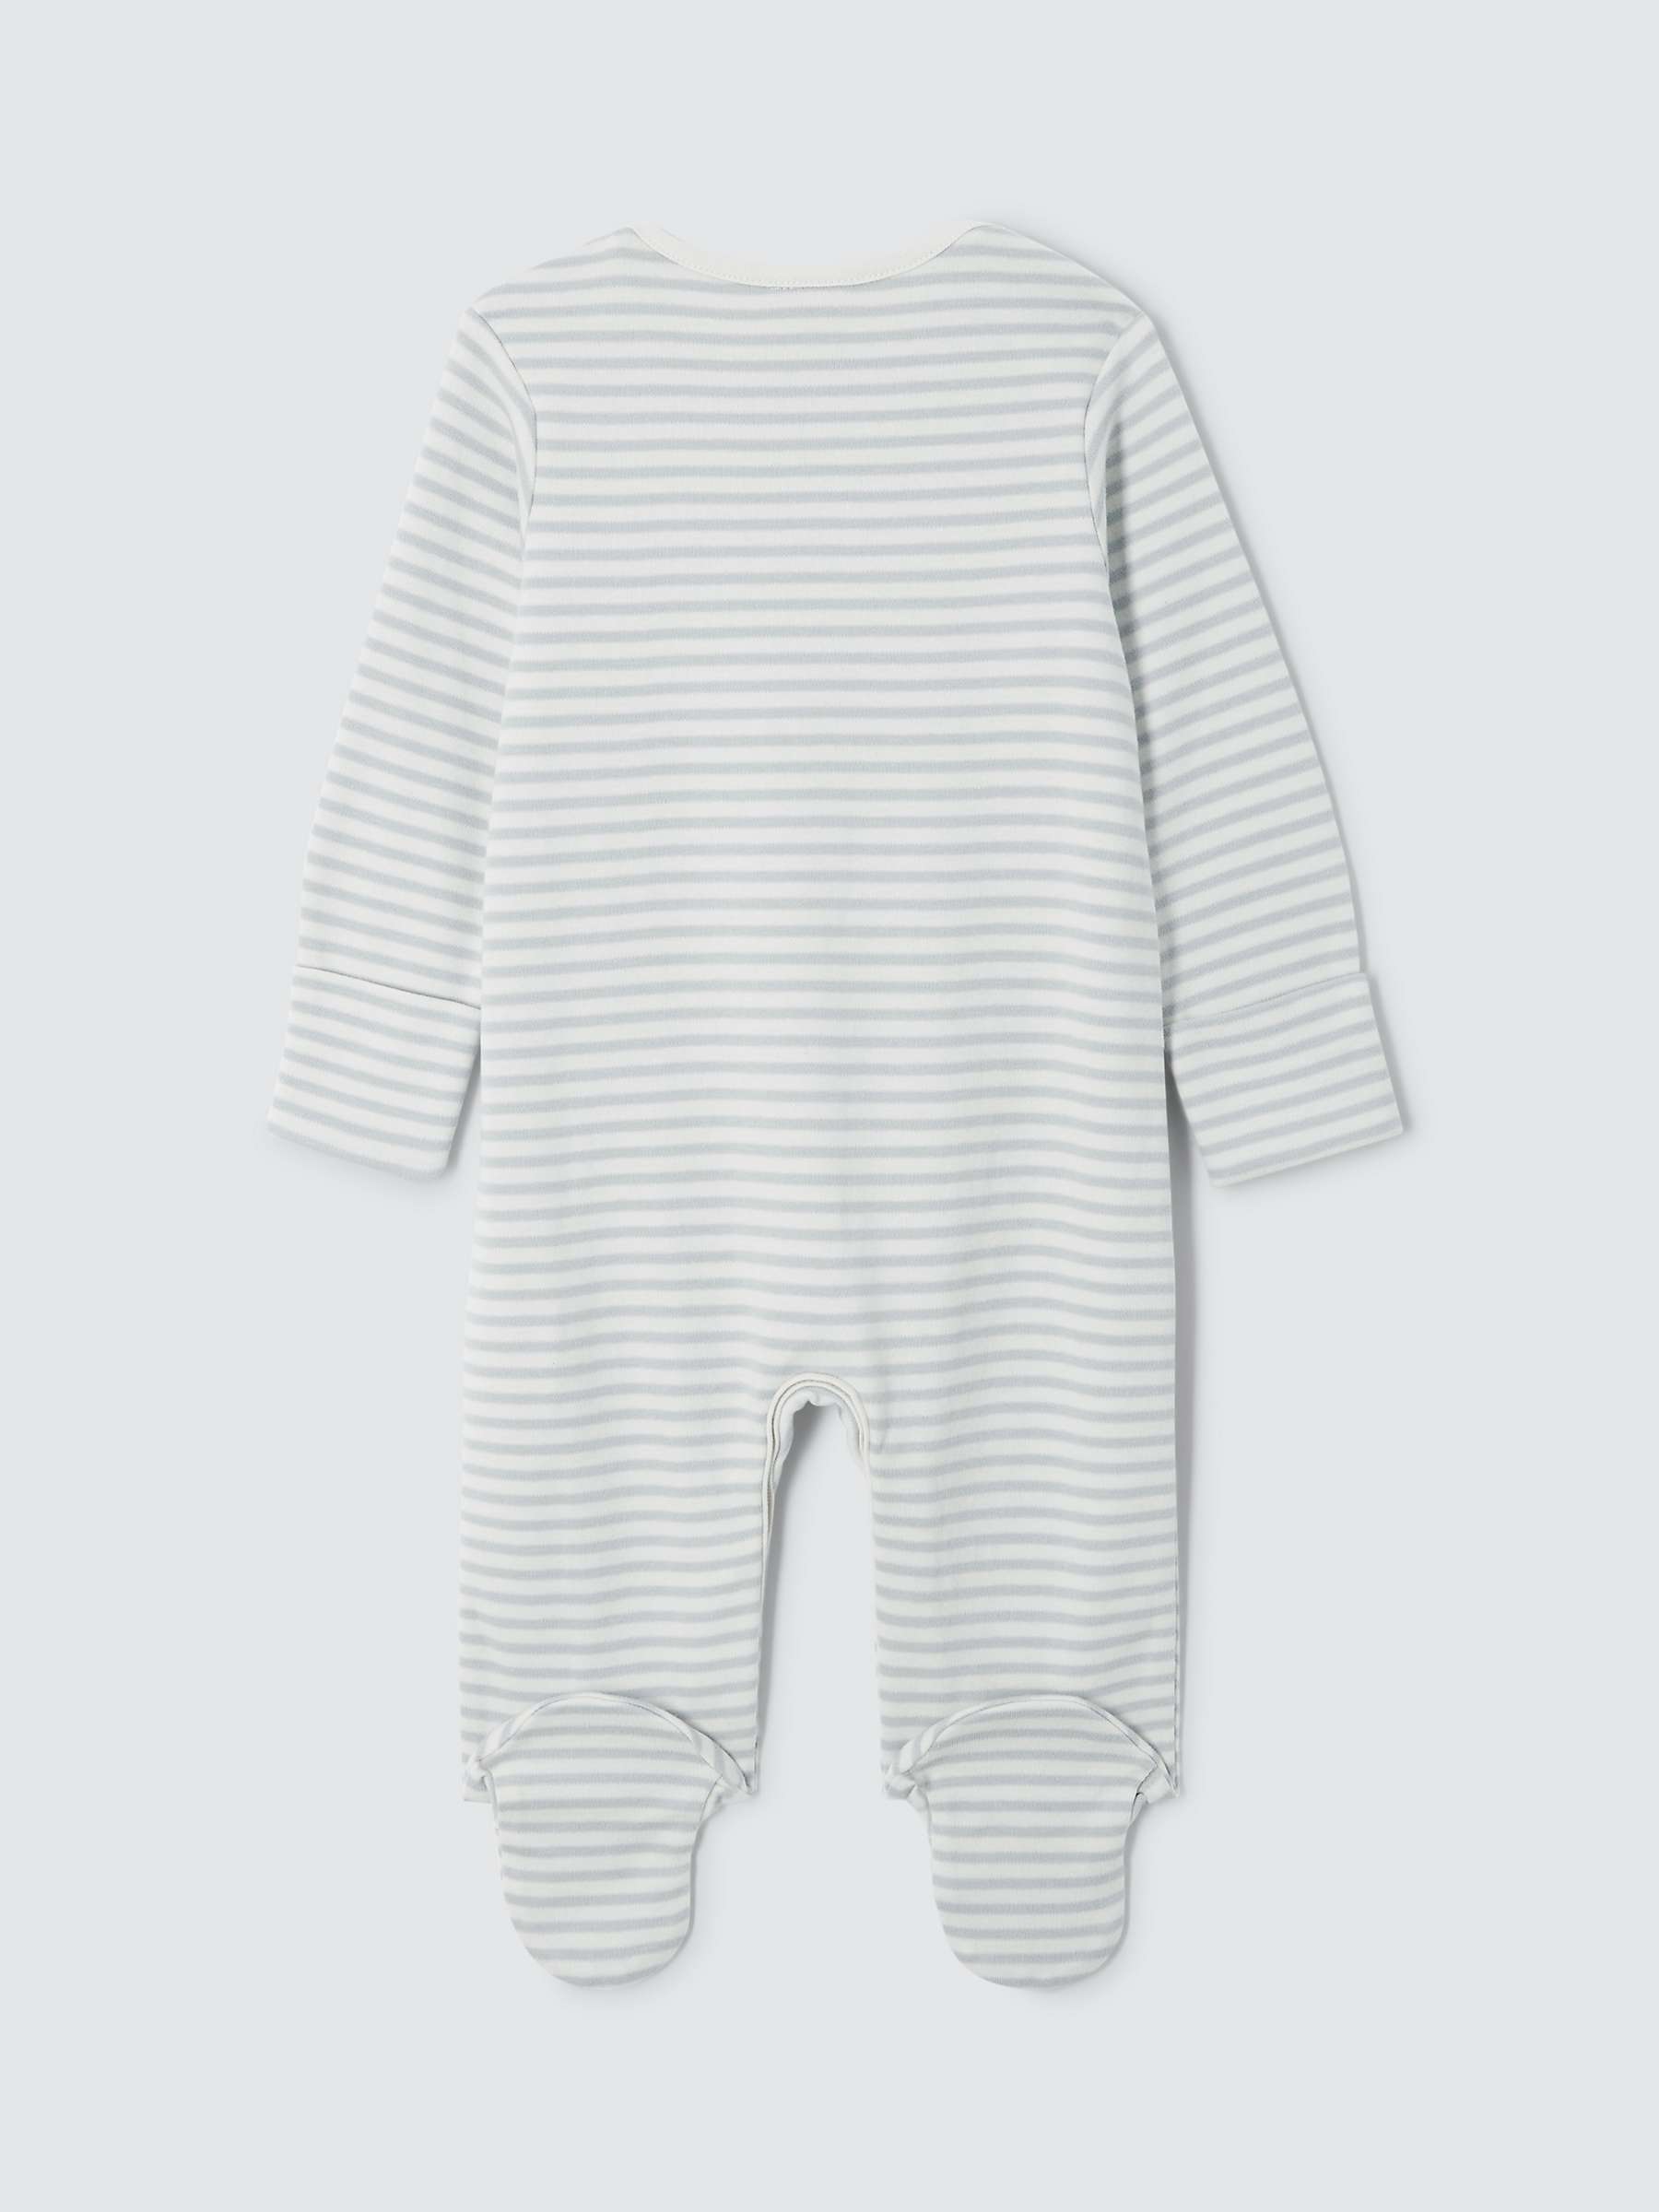 Buy John Lewis Baby I Love Mummy Stripe Sleepsuit, Grey/Cream Online at johnlewis.com